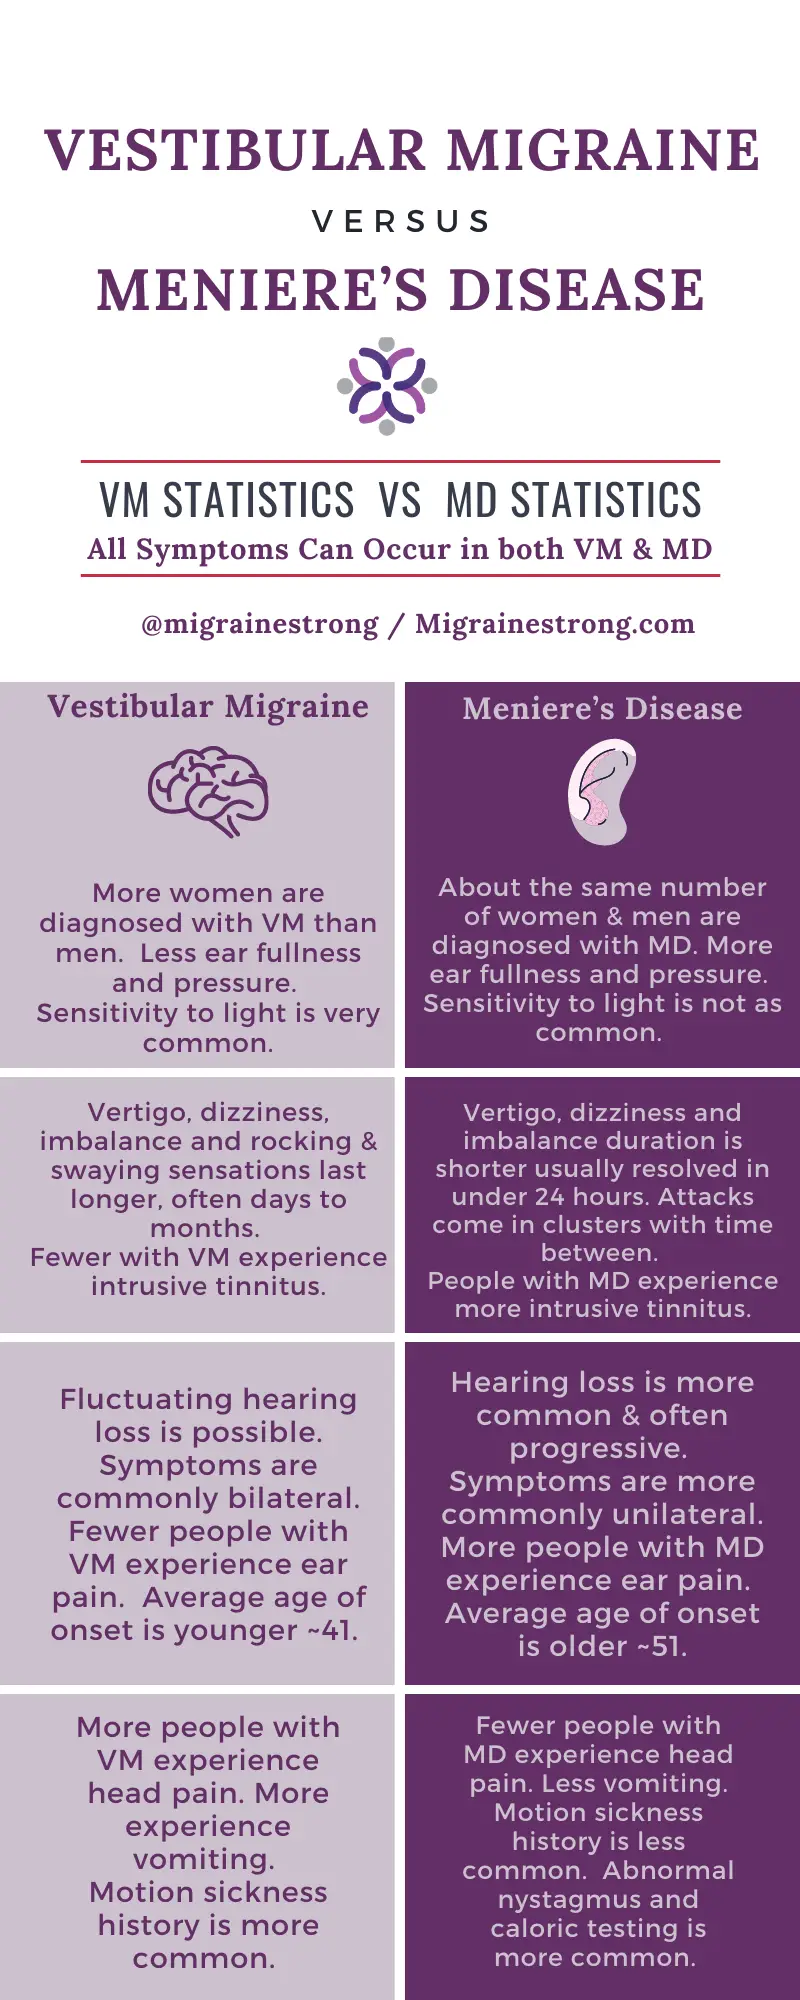 Vestibular migraine and meniere's disease 